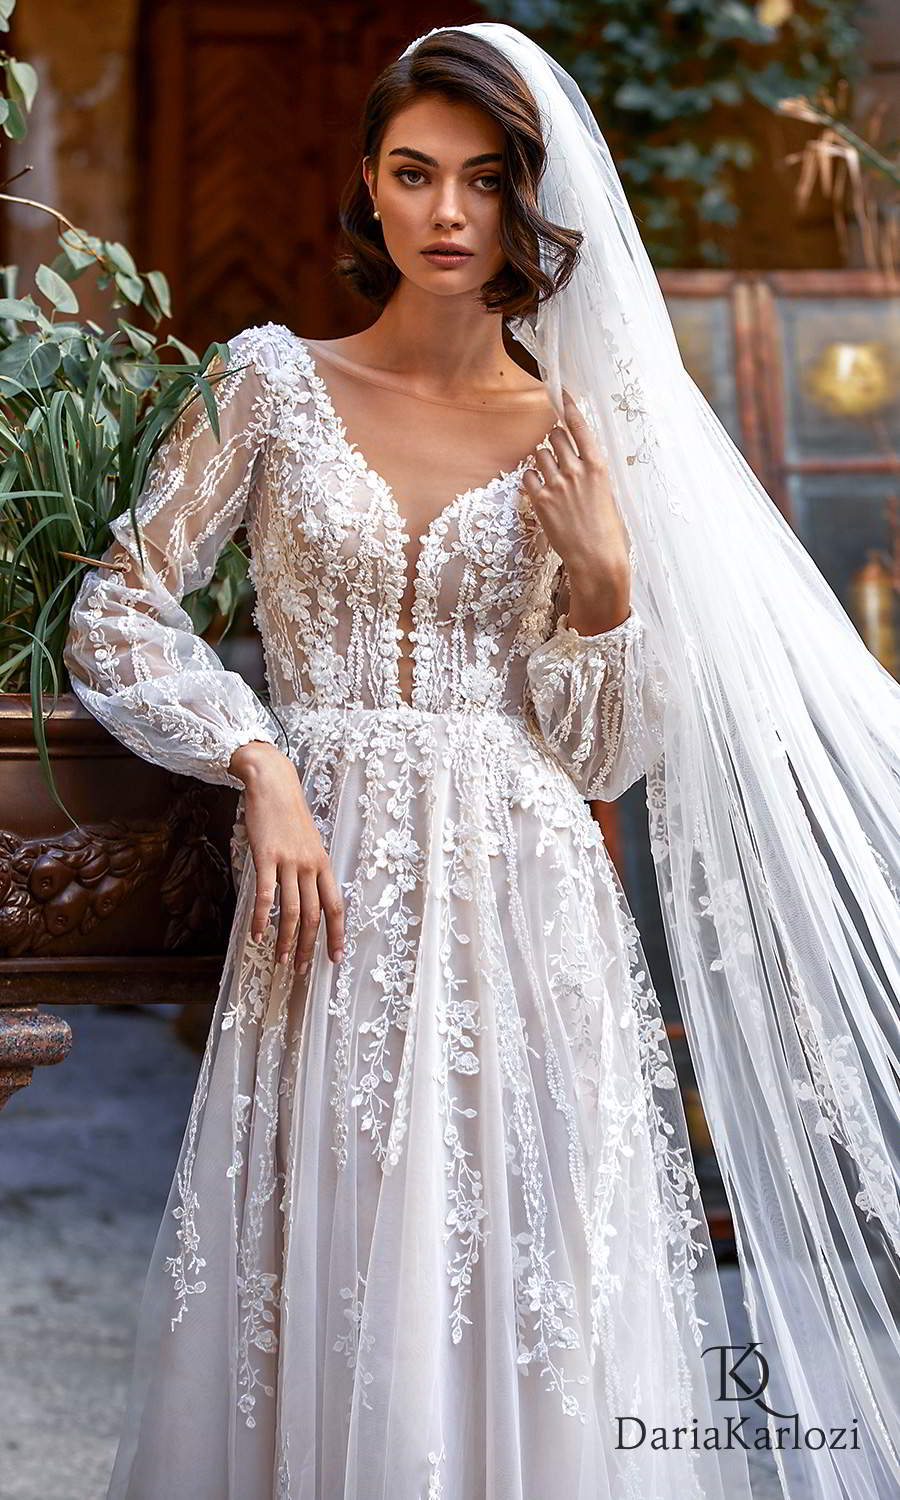 daria karlozi 2021 graceful dream bridal long bishop sleeves v neckline fully embellished boho a line ball gown wedding dress chapel train veil (light kiss) zv